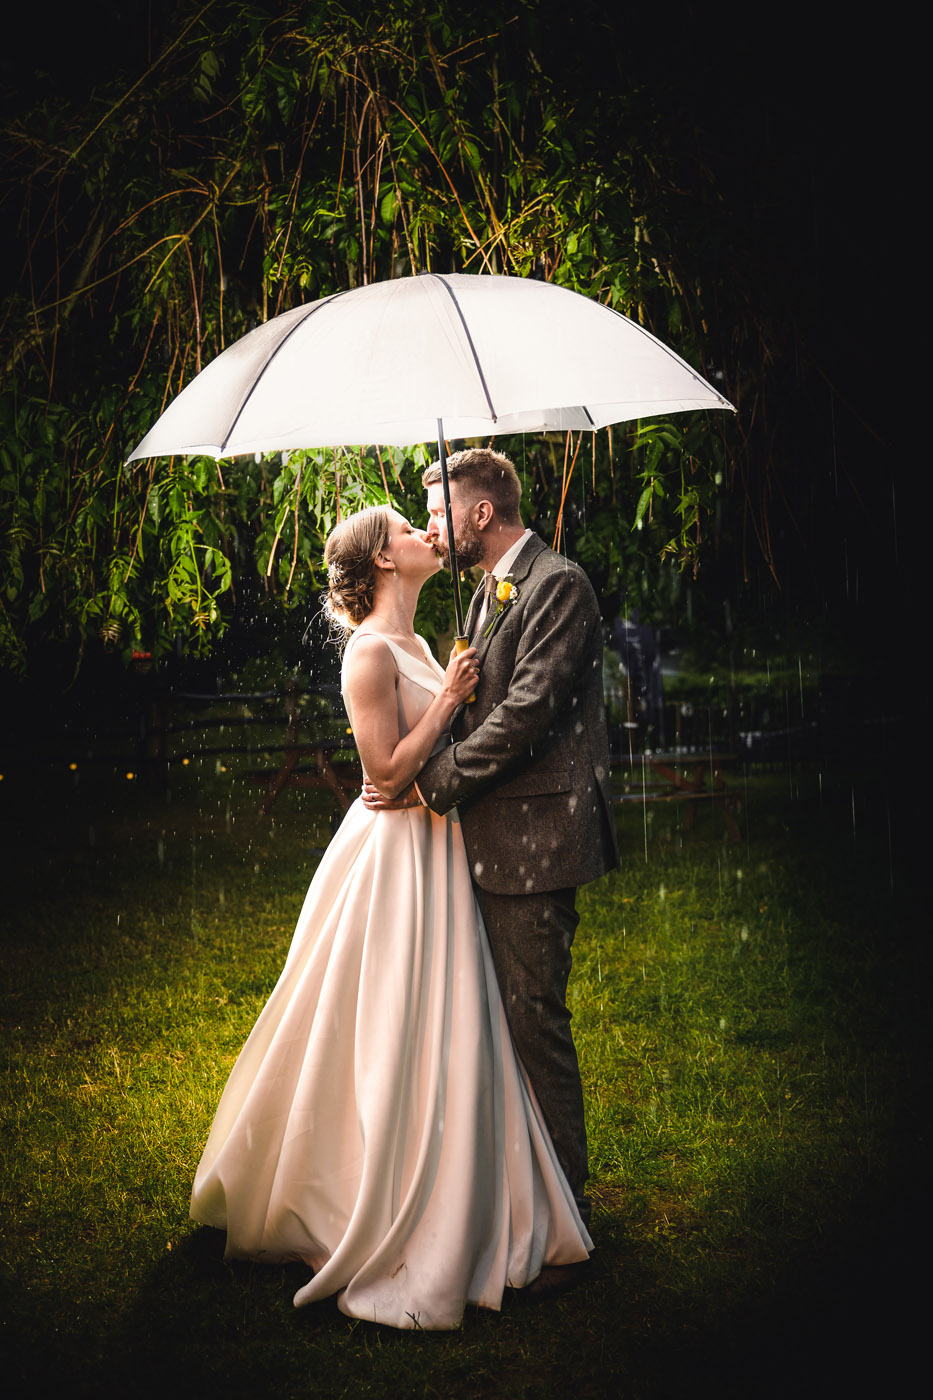 Bride & Groom wedding photography at The Boathouse, Bath